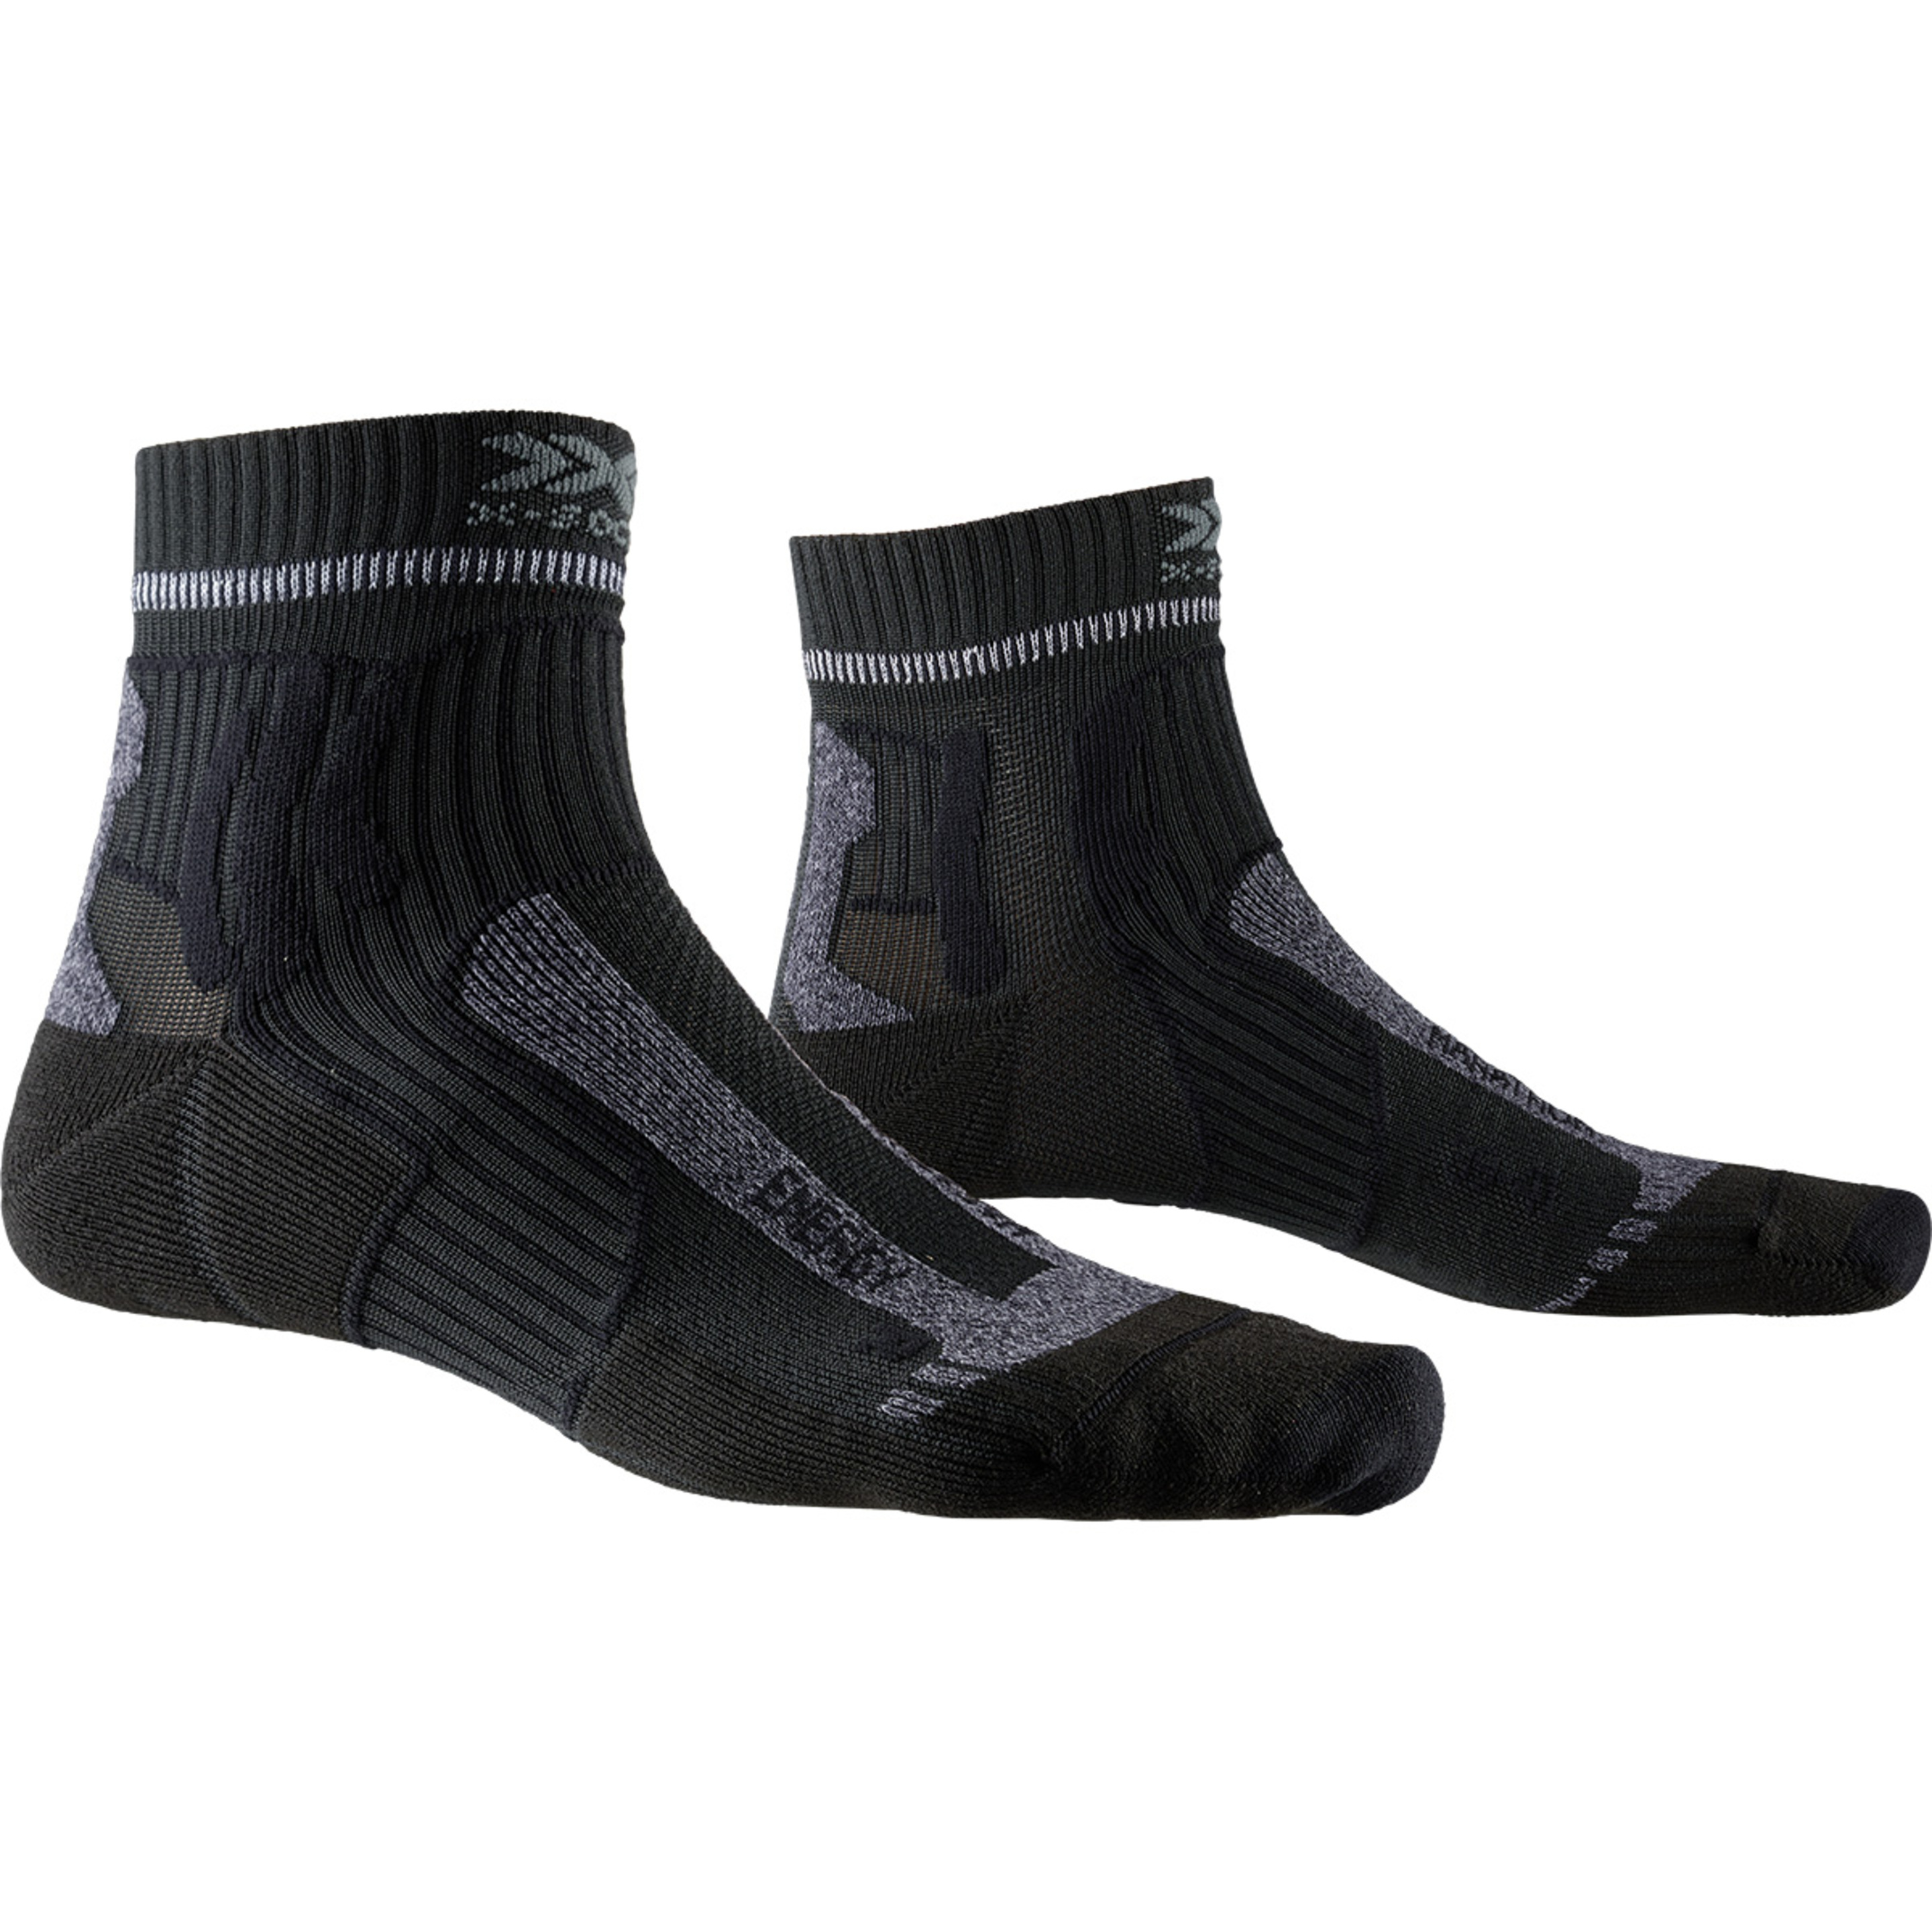 Calcetin Run Marathon Energy  X-socks - Negro  MKP